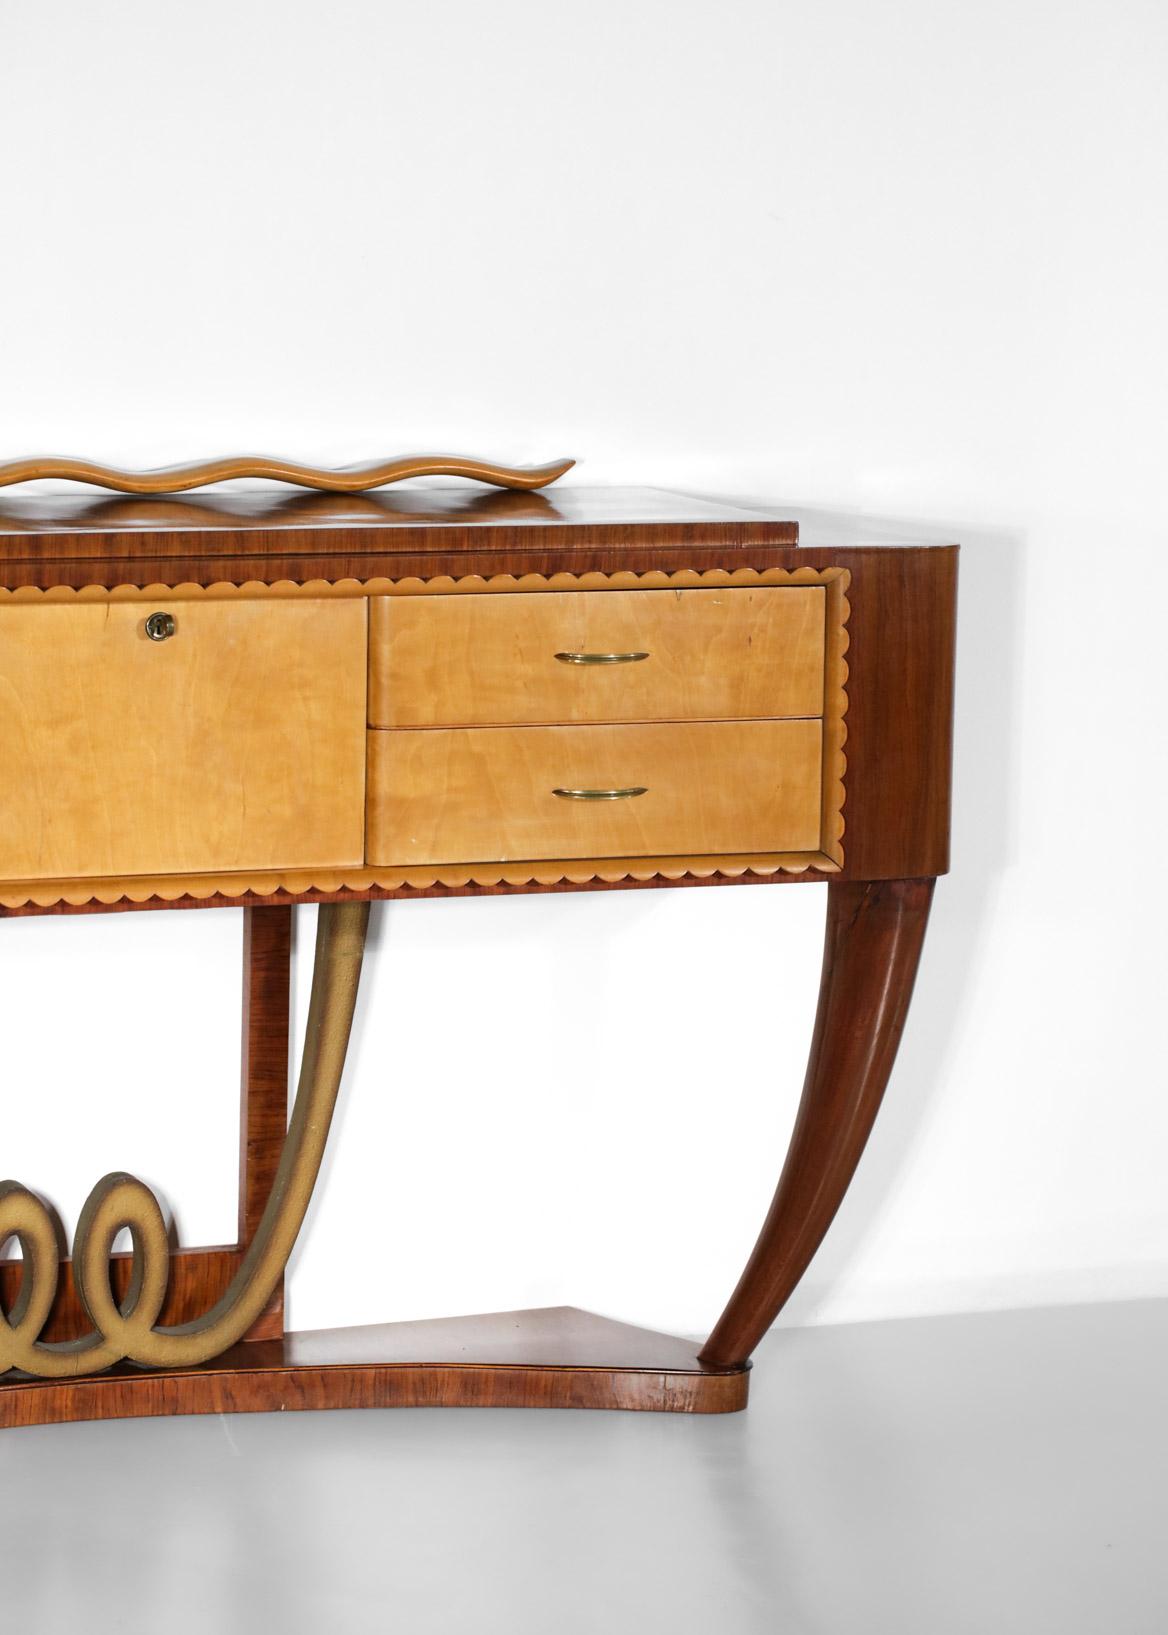 Italian Console Unit Sideboard 60's Style Paolo Buffa Gio Ponti Wood For Sale 2